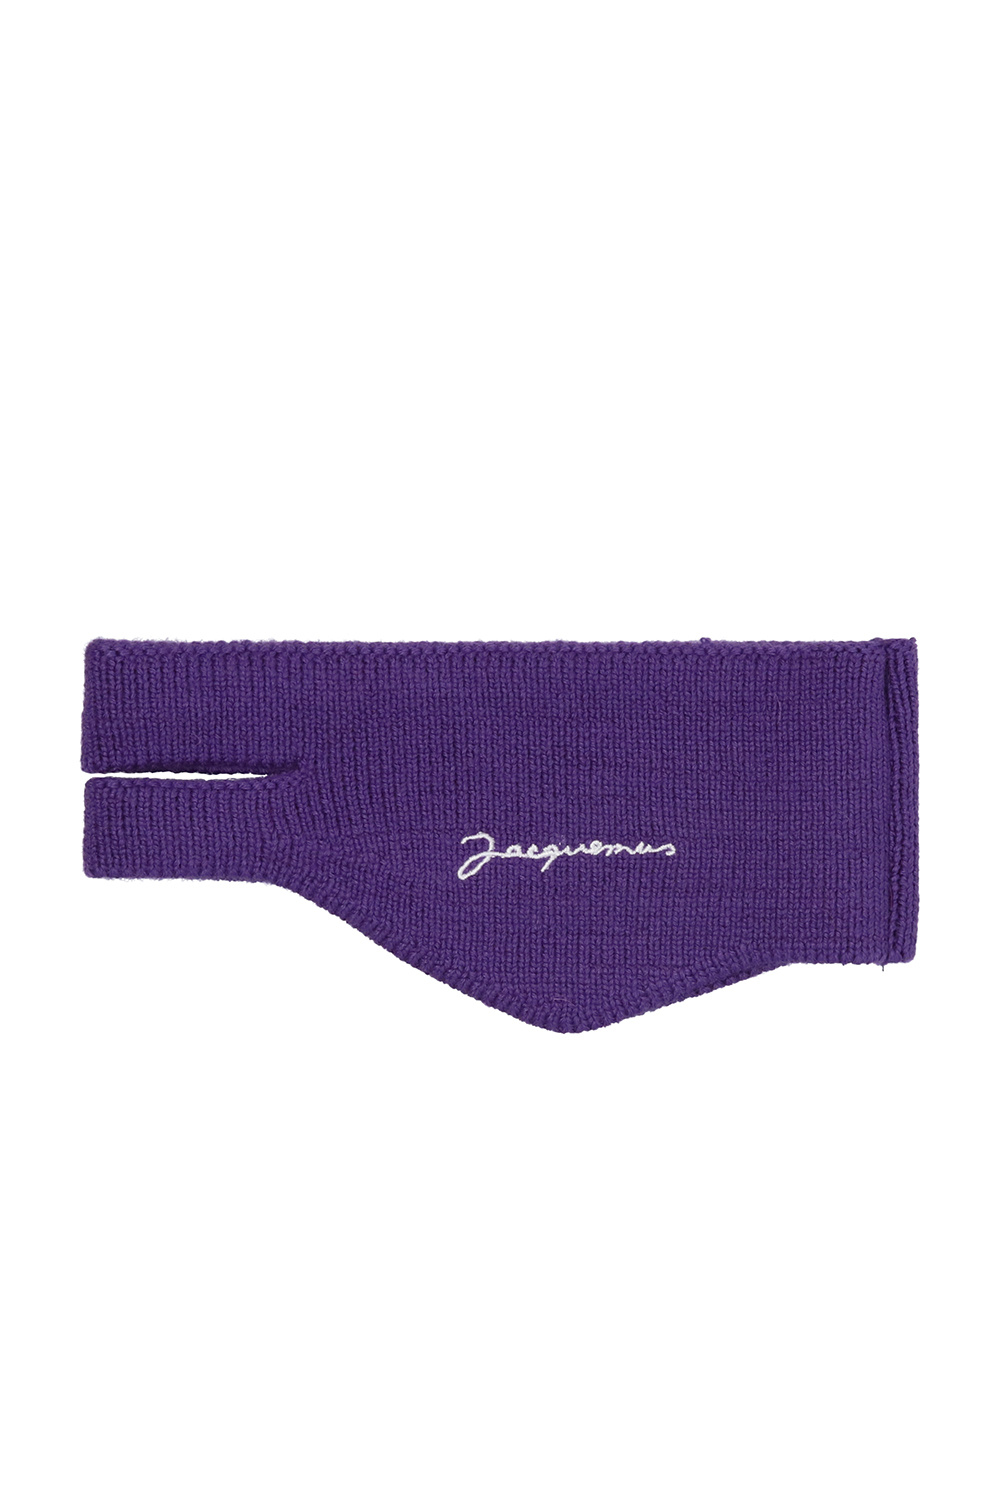 Jacquemus uniform experiment x carhartt roll edge knit cap